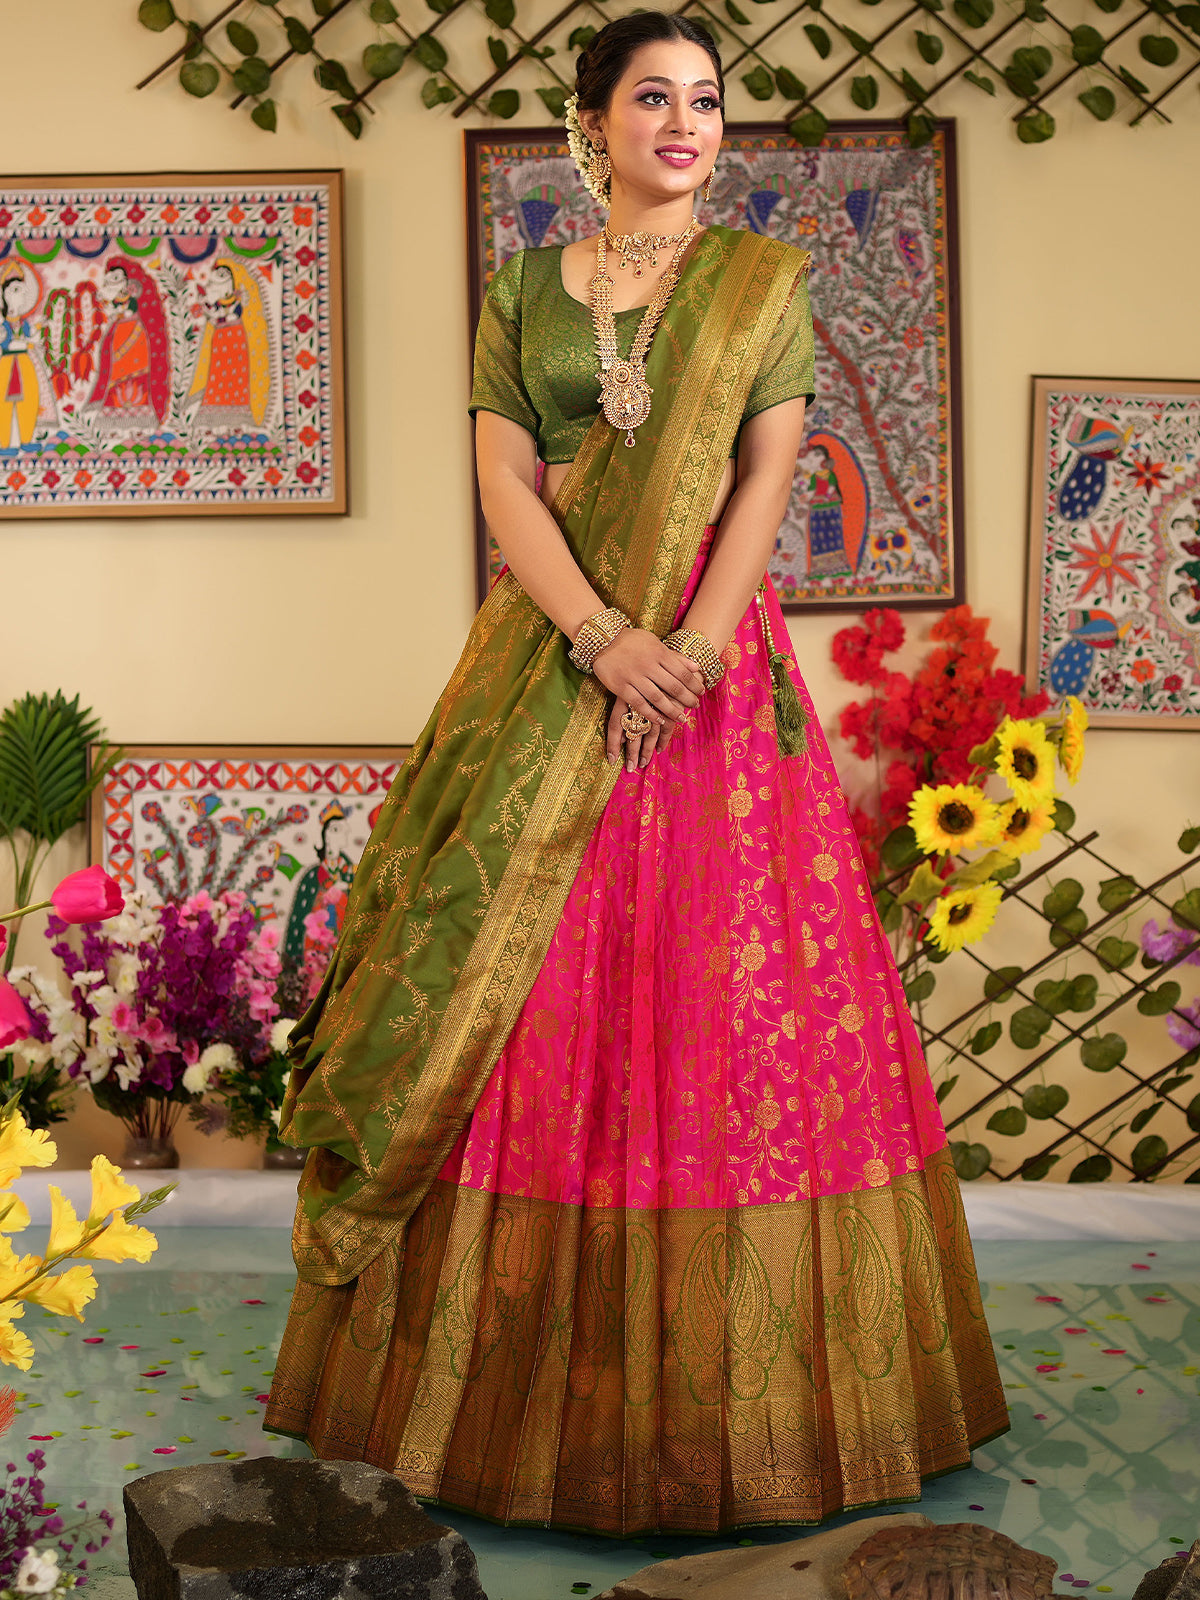 Pre Owned Small/Medium Pink and Green Indian Sharara Lehenga Choli Set Eid  Dress | eBay